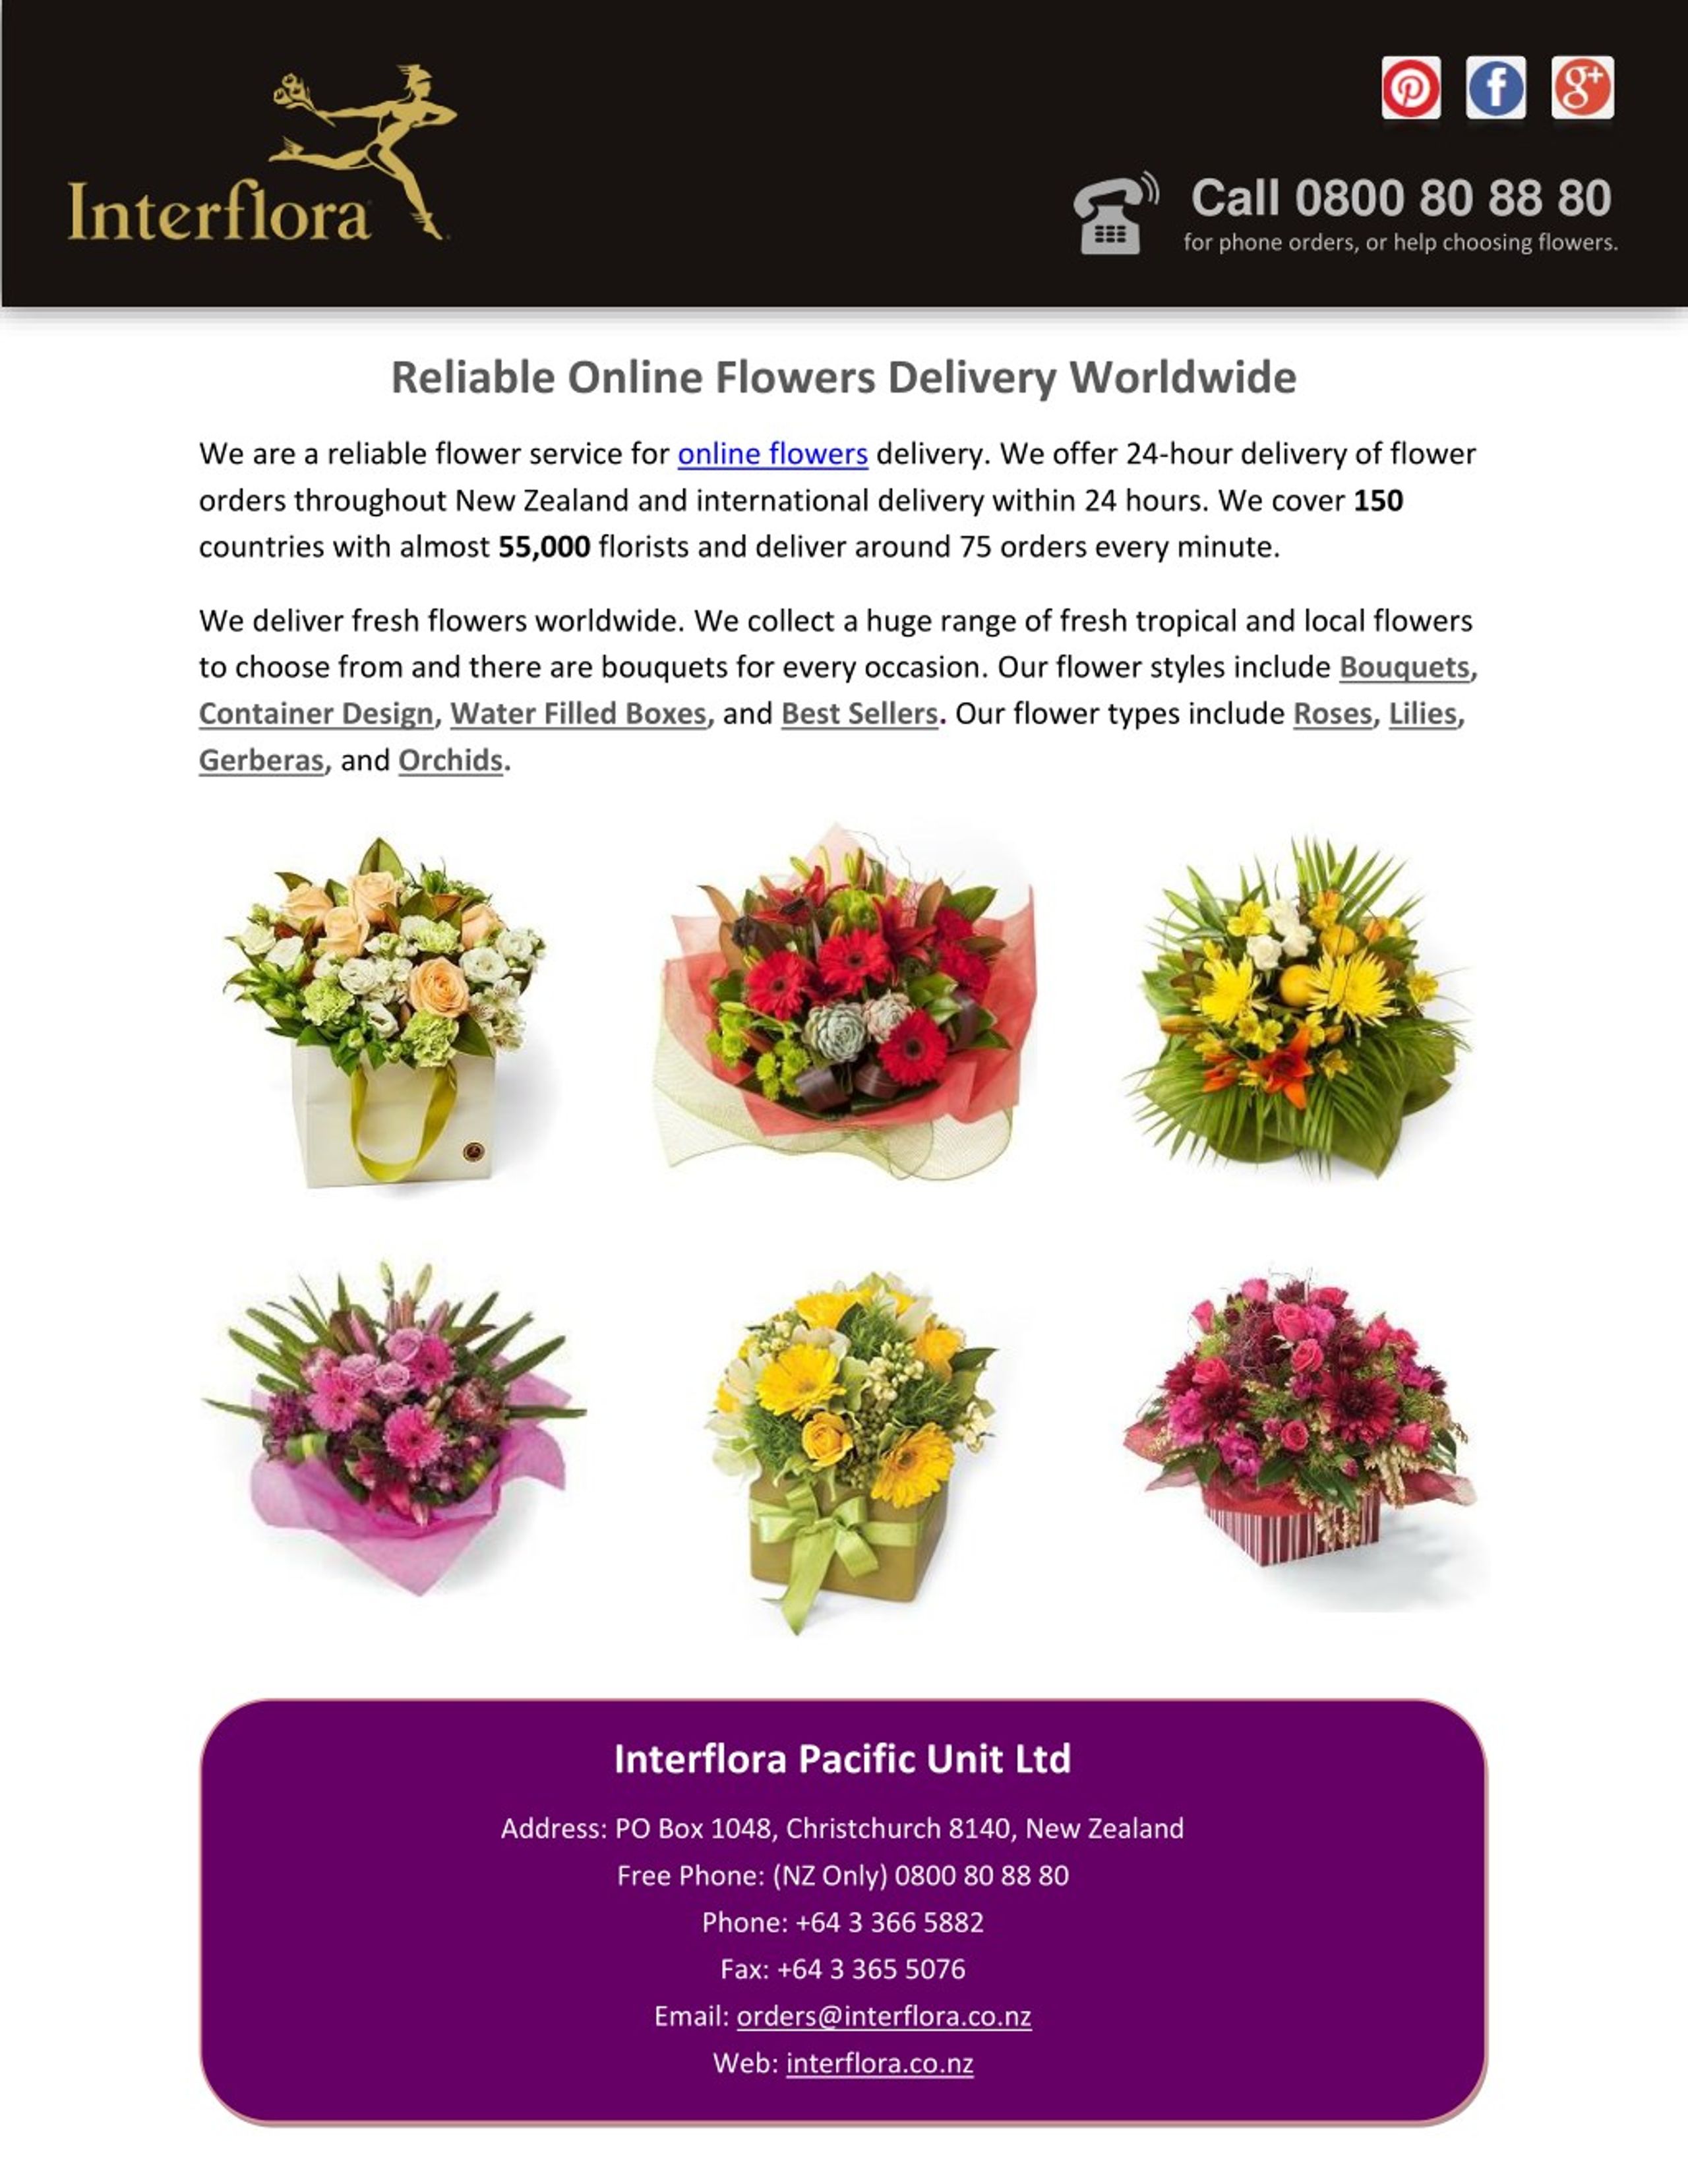 worldwide flower delivery